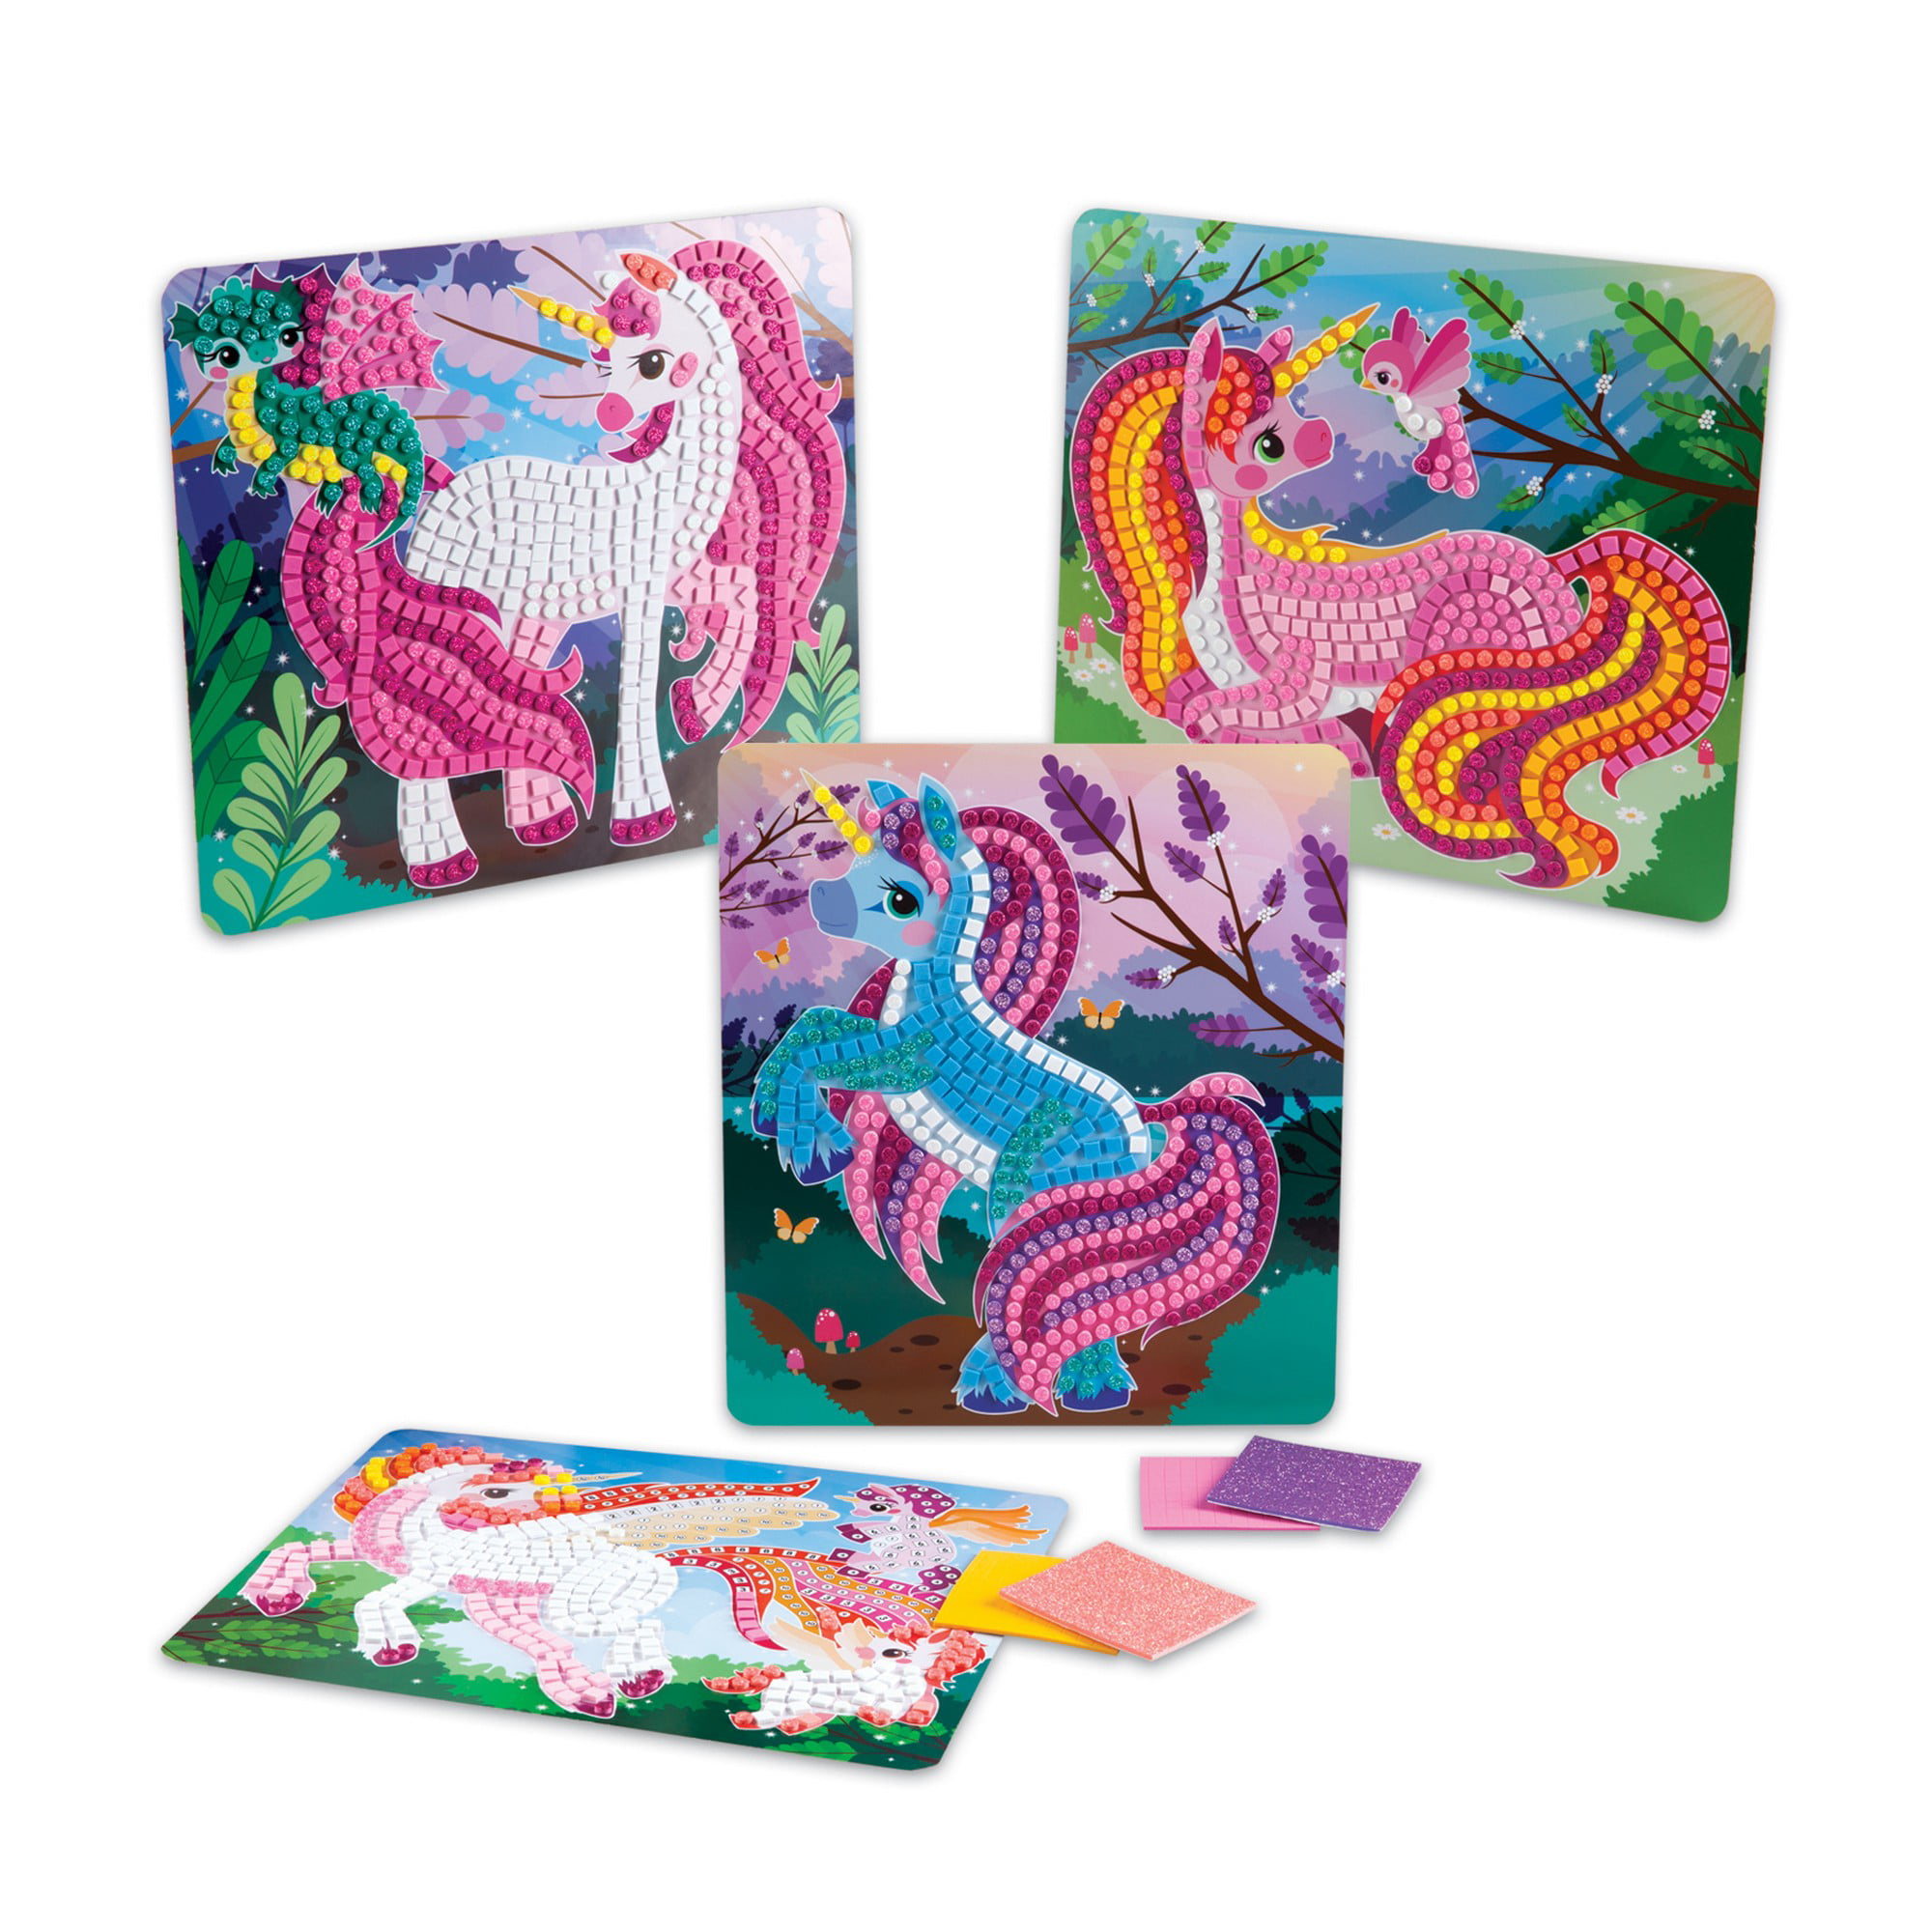 Mosaic Unicorn Kit, Make A Mosaic Kit, Mosaic Activity Birthday